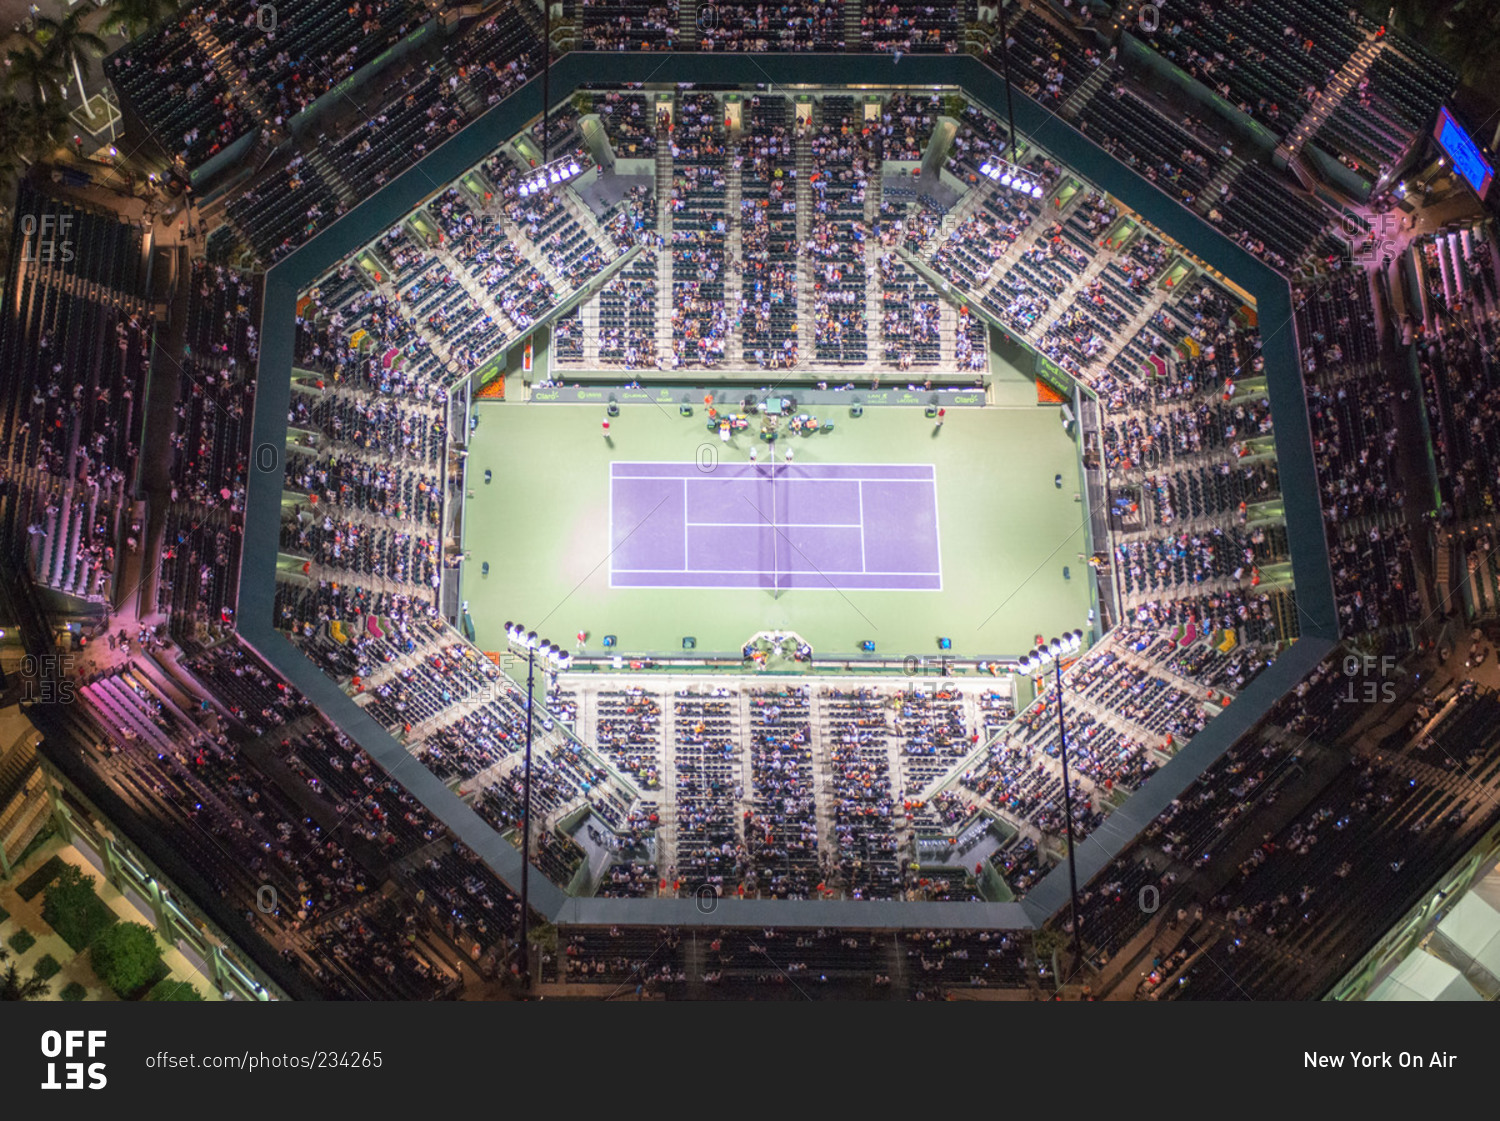 Key Biscayne Florida March 31 2015: Crandon Park Tennis Center